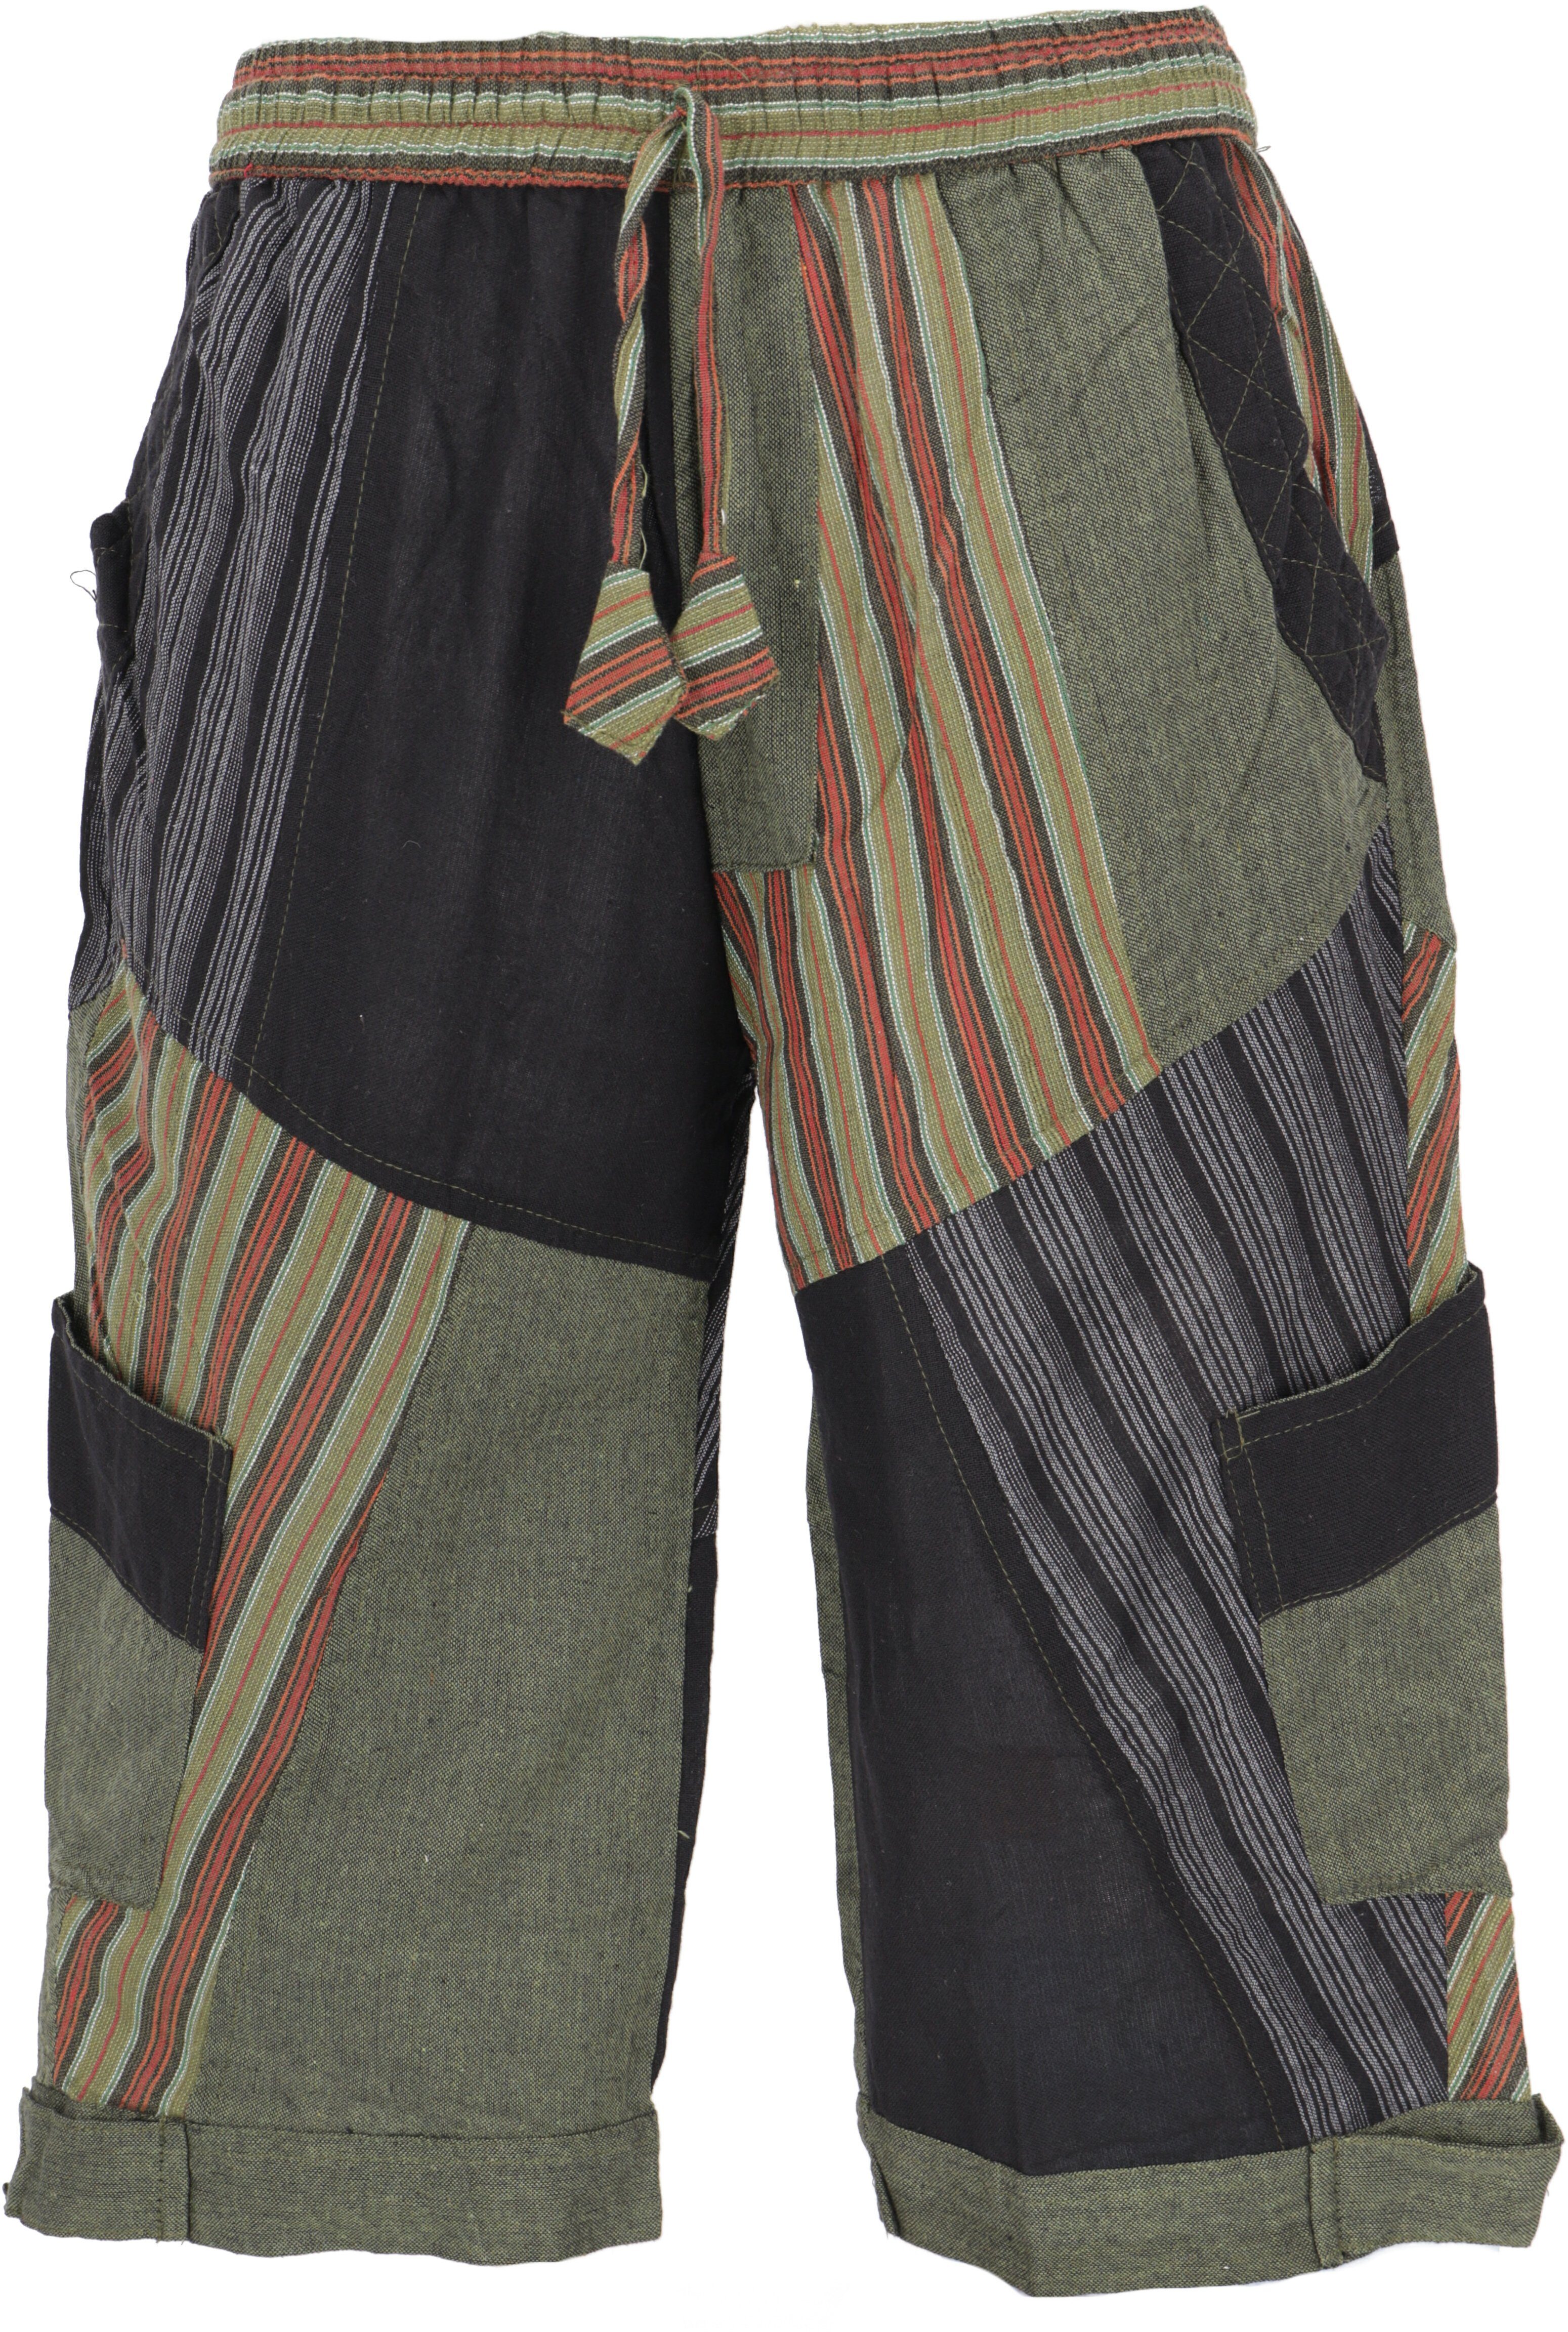 Goa Patchwork Style, Shorts Yogahose, alternative Goa Ethno Guru-Shop Bekleidung Hose, -.. schwarz/grün Relaxhose